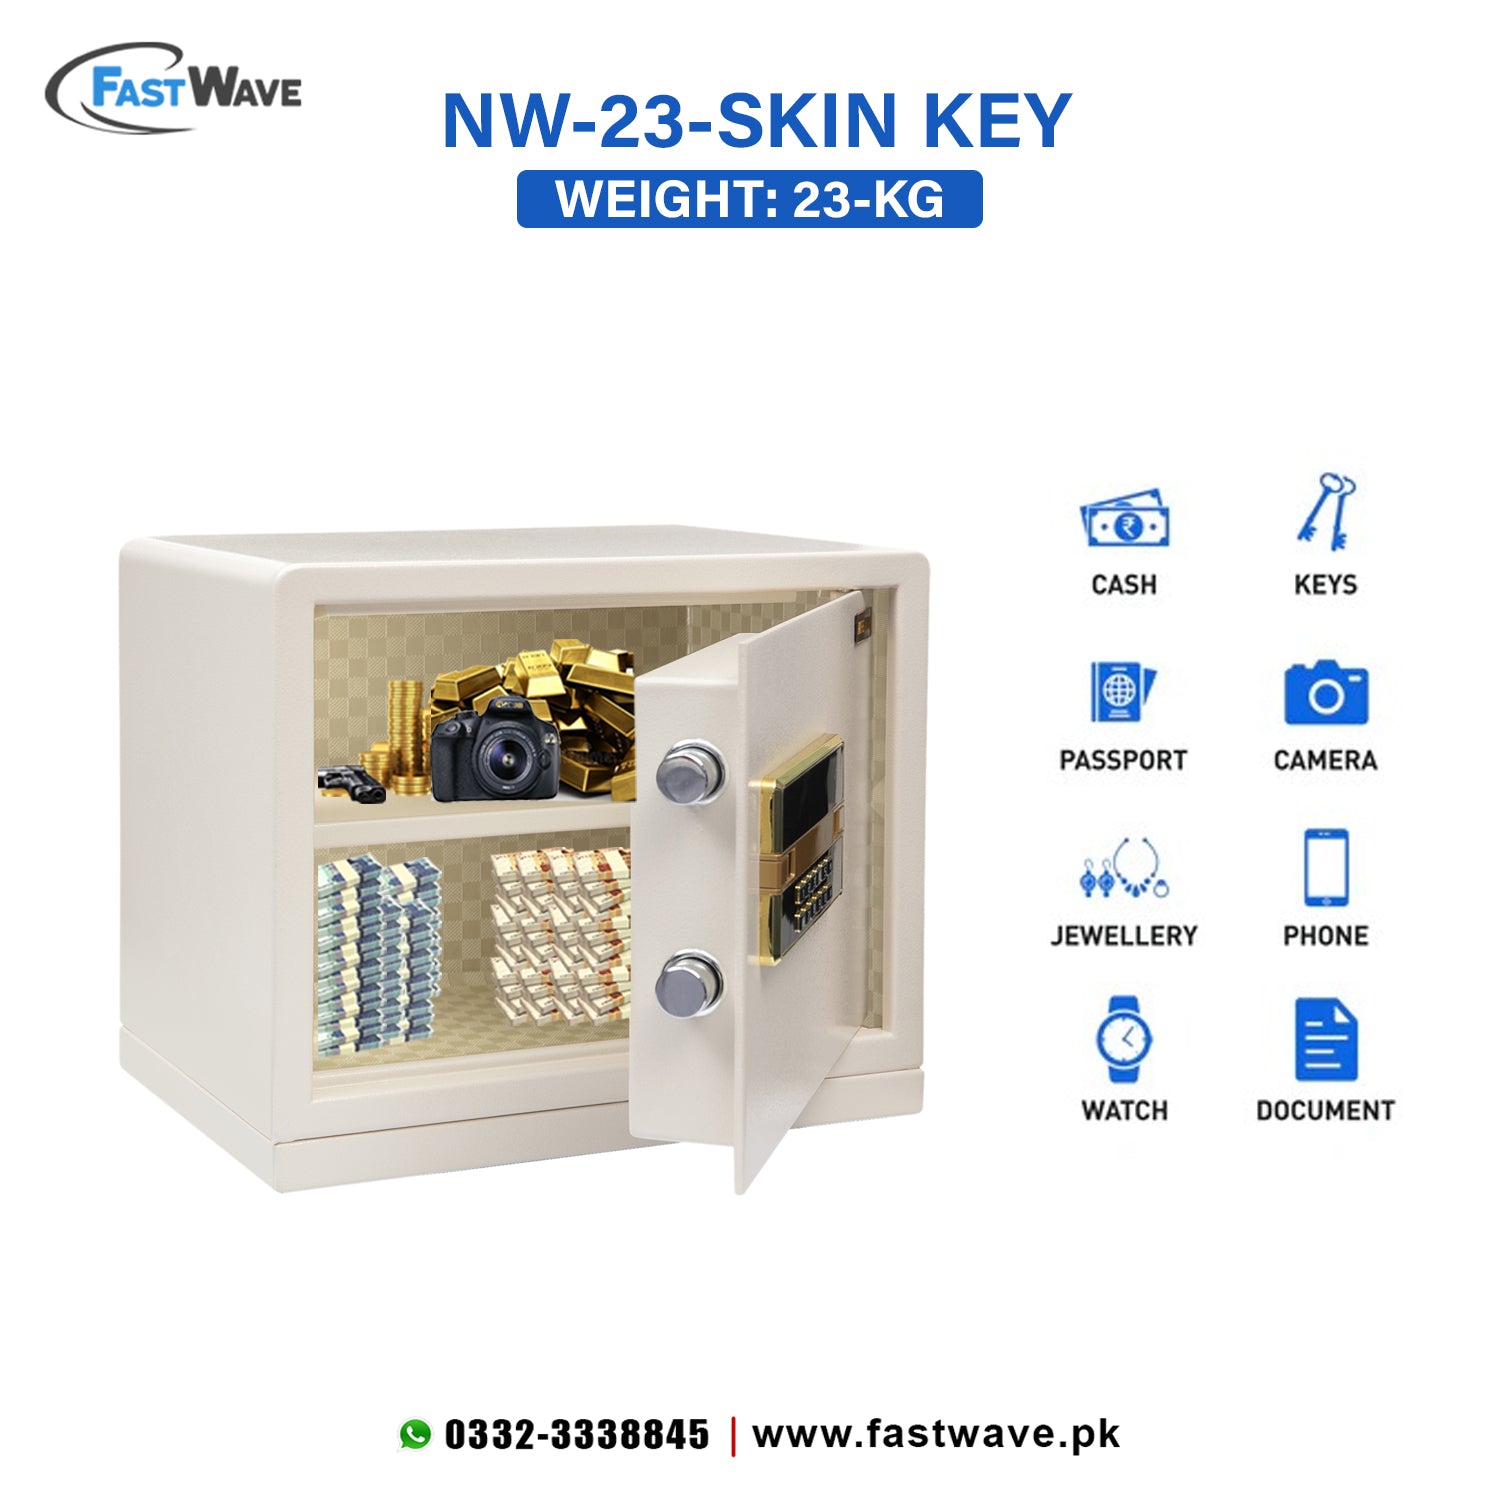 Digital Security Locker NW-KG-23 Skin Key